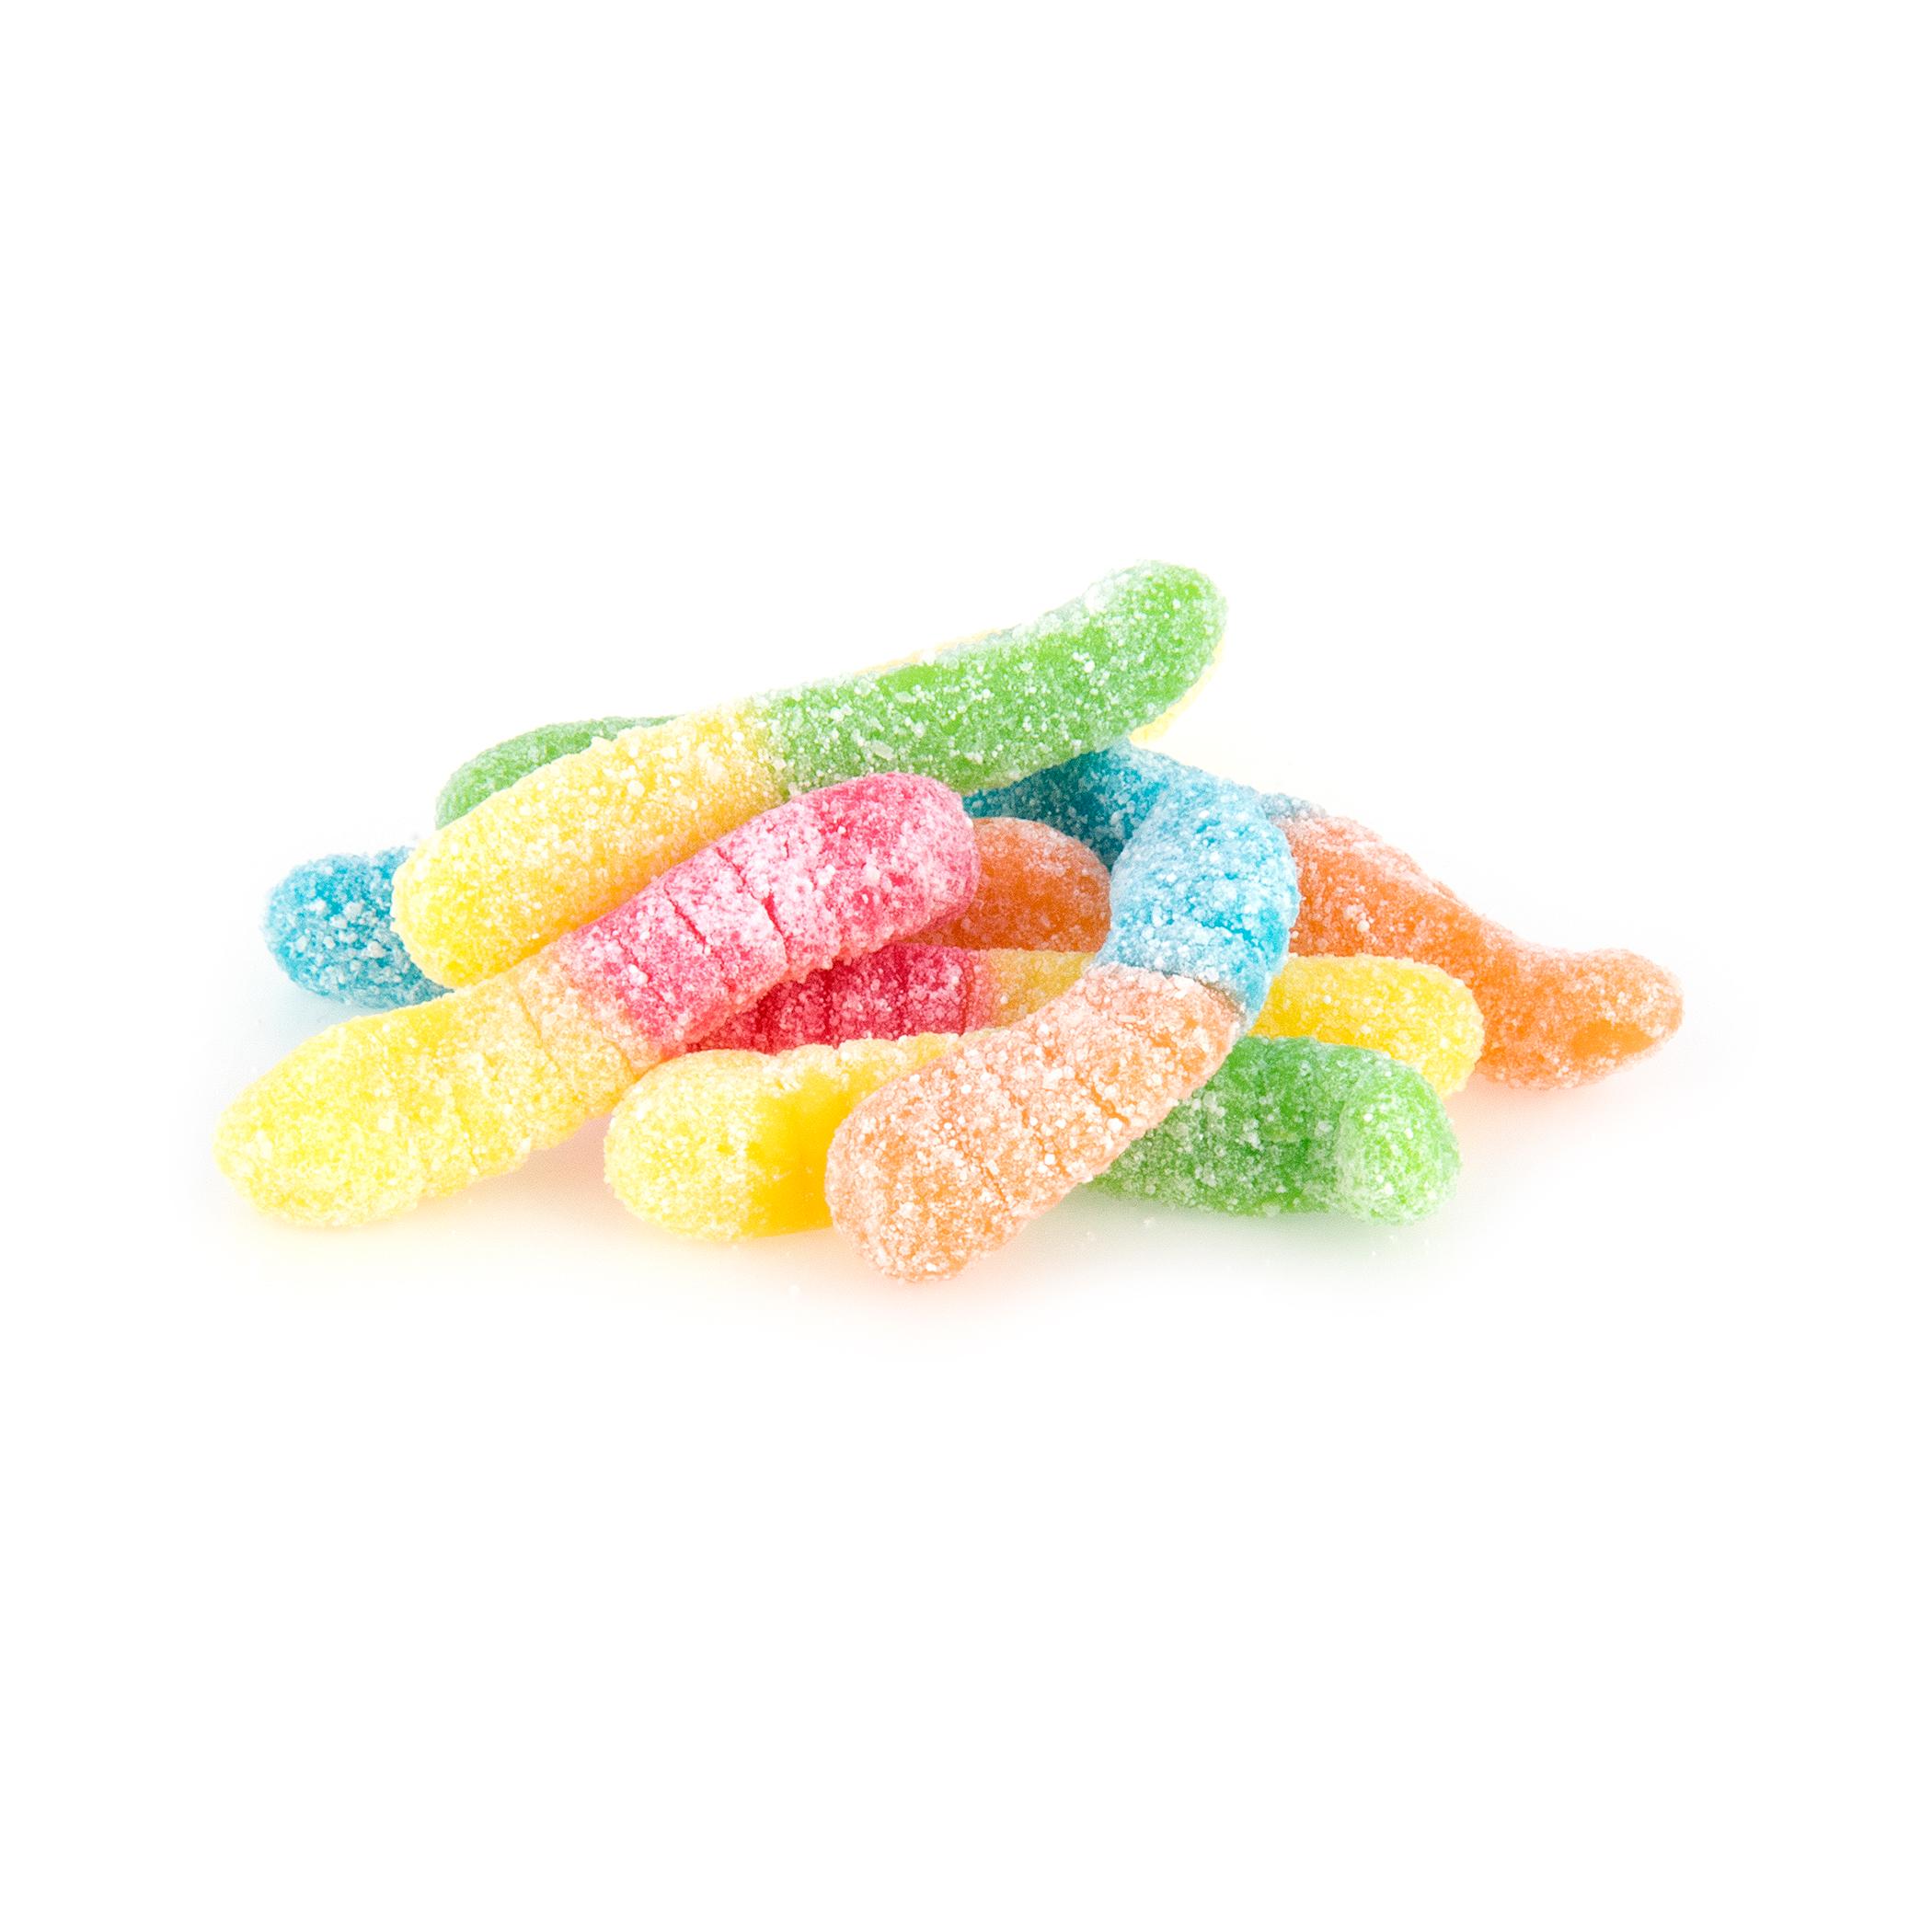  Sour Mini Neon Worms (1 Lb.)